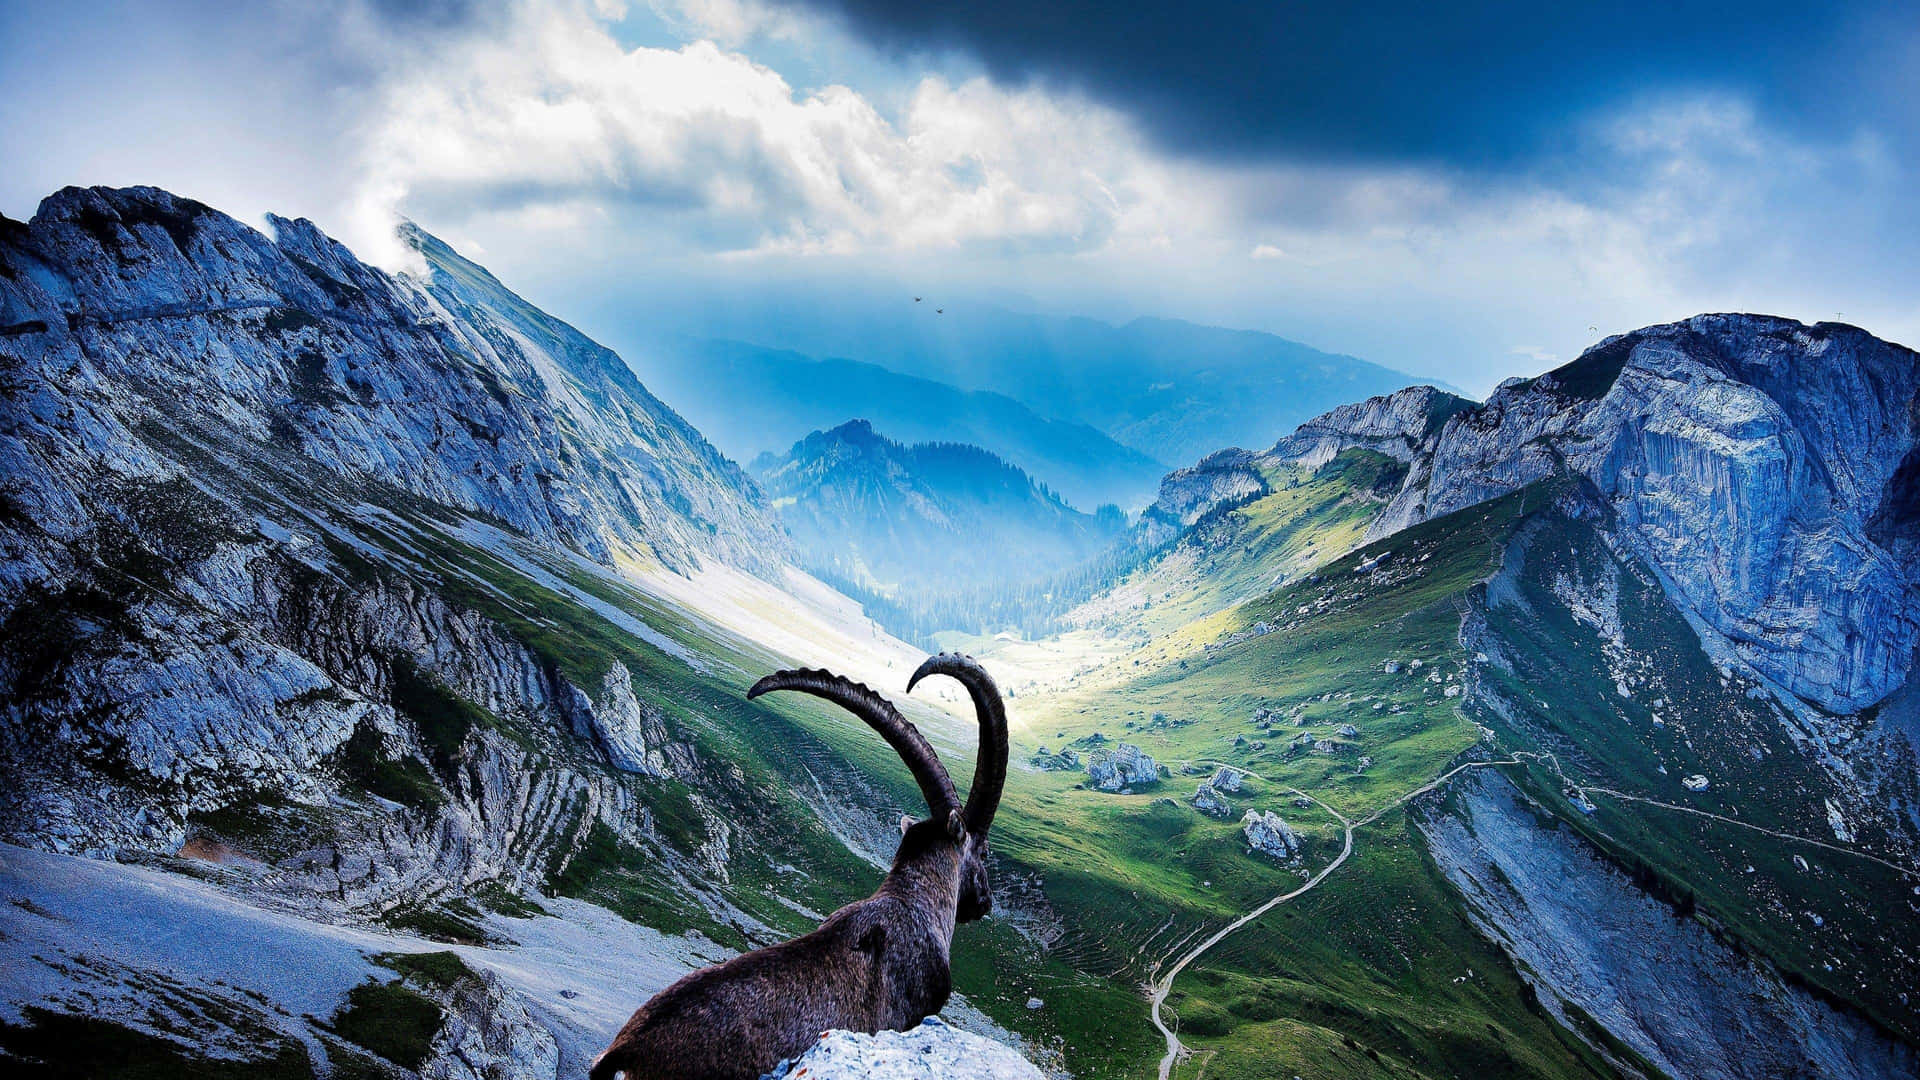 Mountain Goat Overlooking Valley